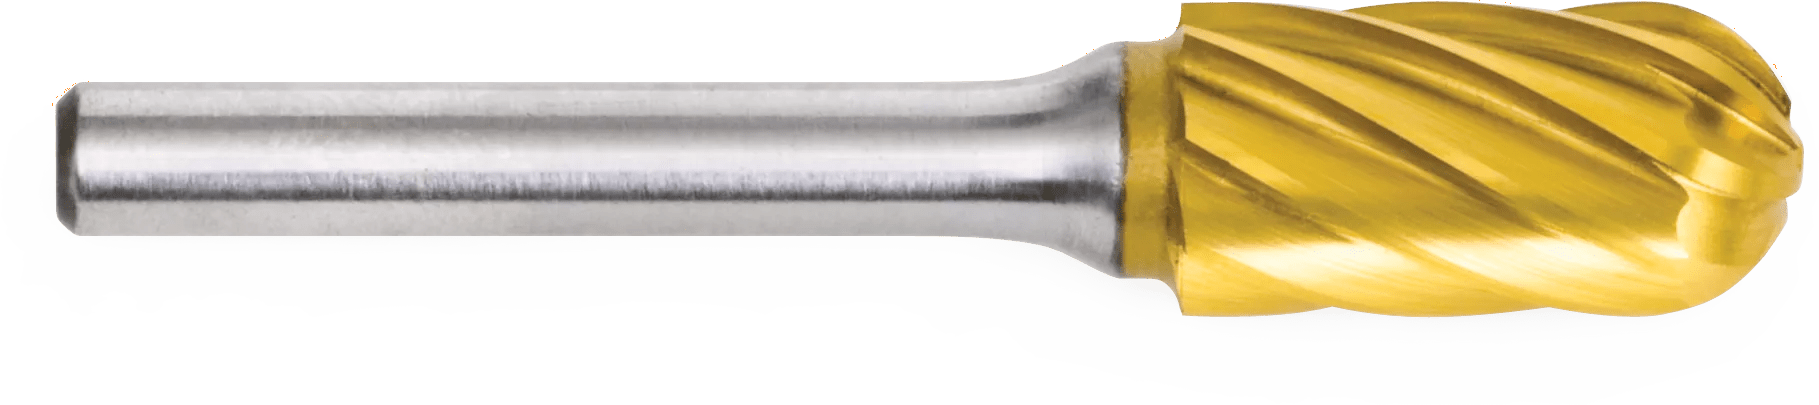 1/2" x 1" TiN Coated Cylindrical Radius End Tungsten Carbide Bur for Non-Ferrous Metal